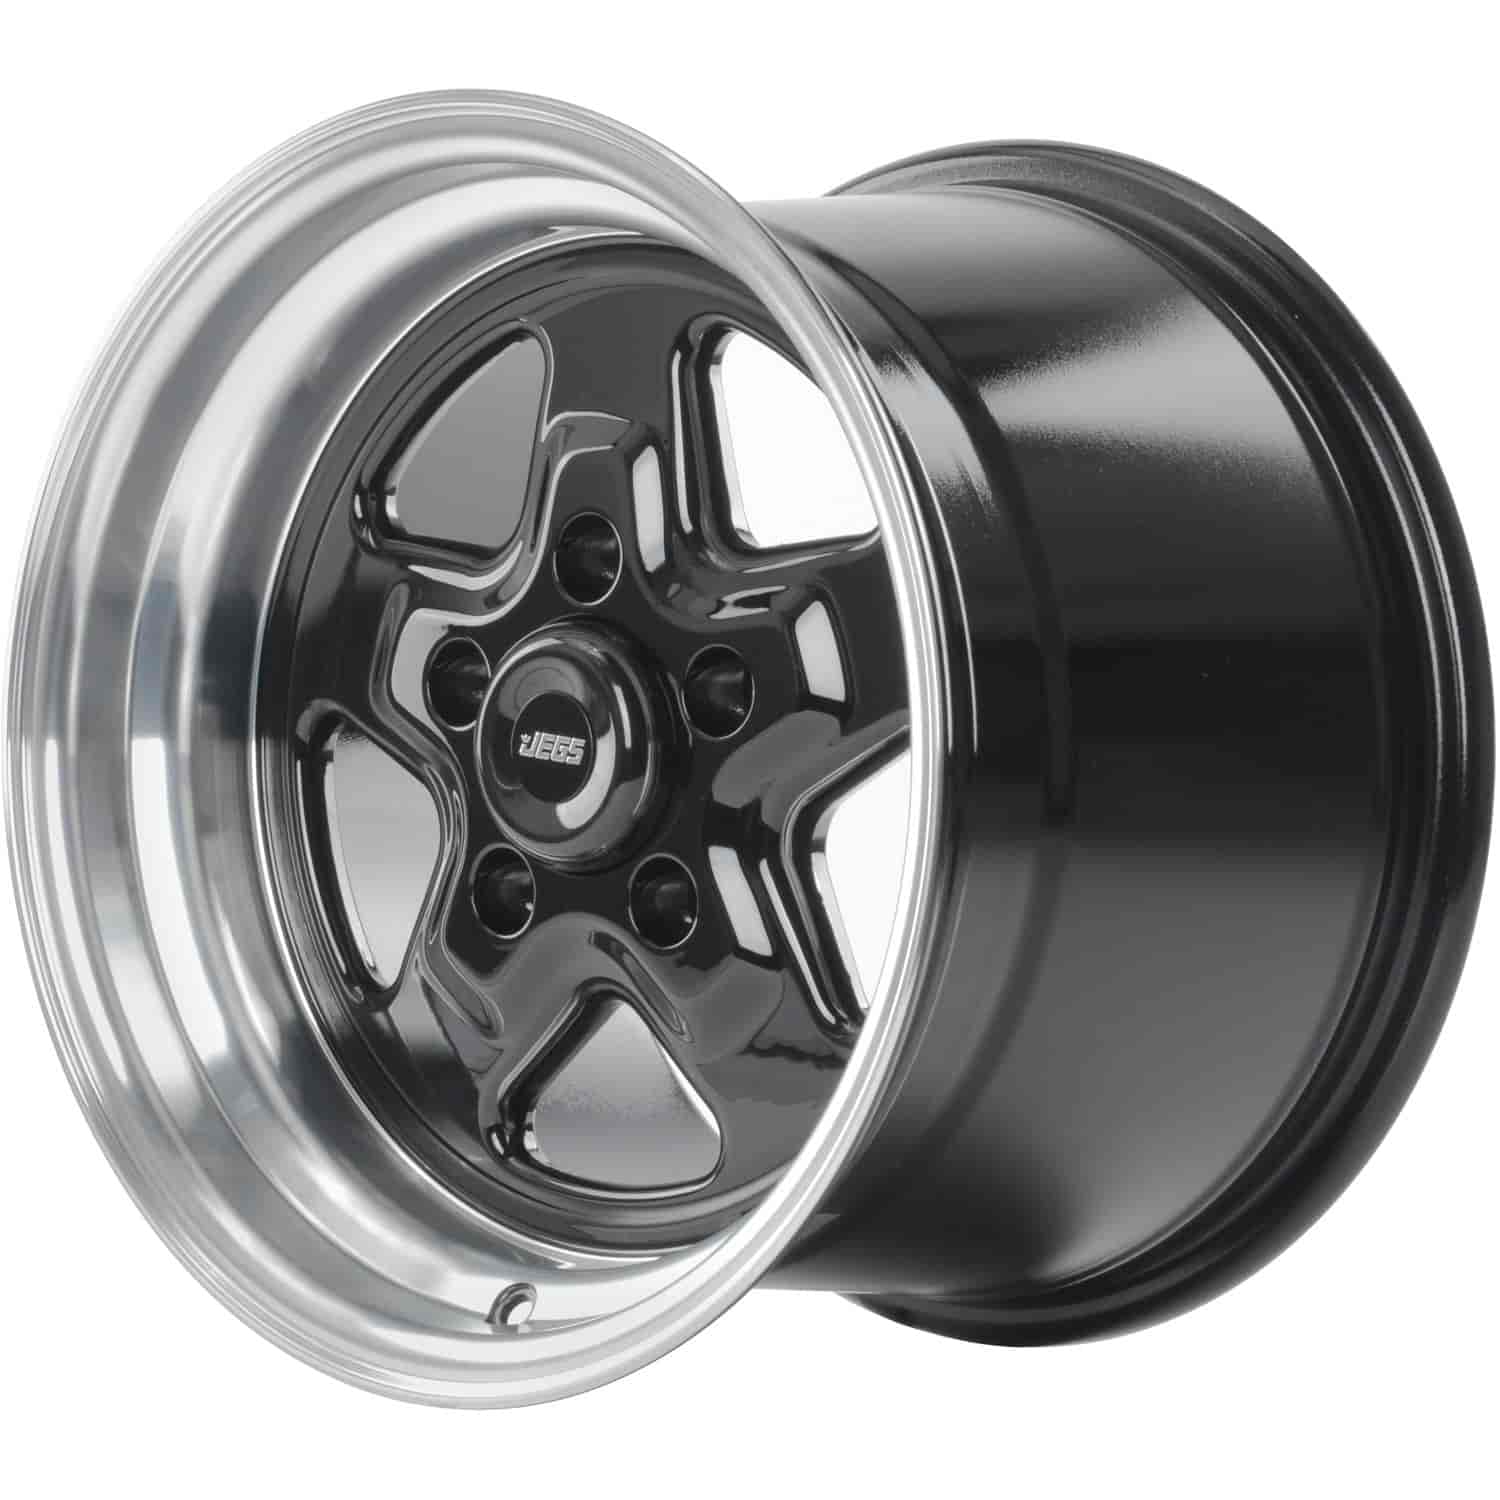 Sport Star 5-Spoke Wheel [Size: 15" x 10"] Polished Lip with Black Spokes